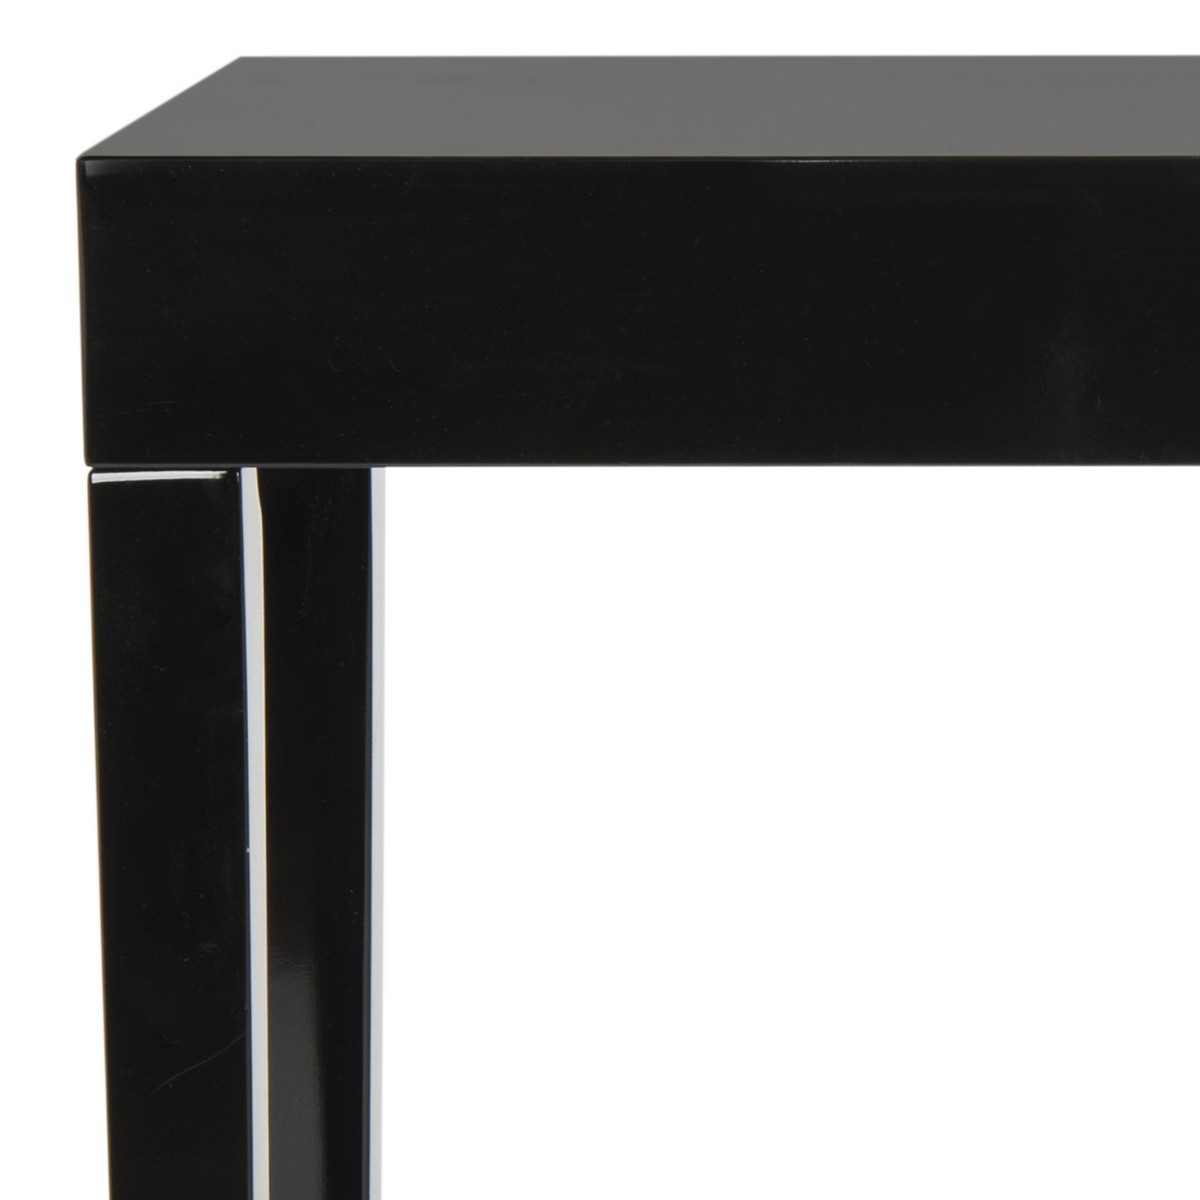 Kayson Mid Century Scandinavian Lacquer Console Table - Black - Arlo Home - Image 4